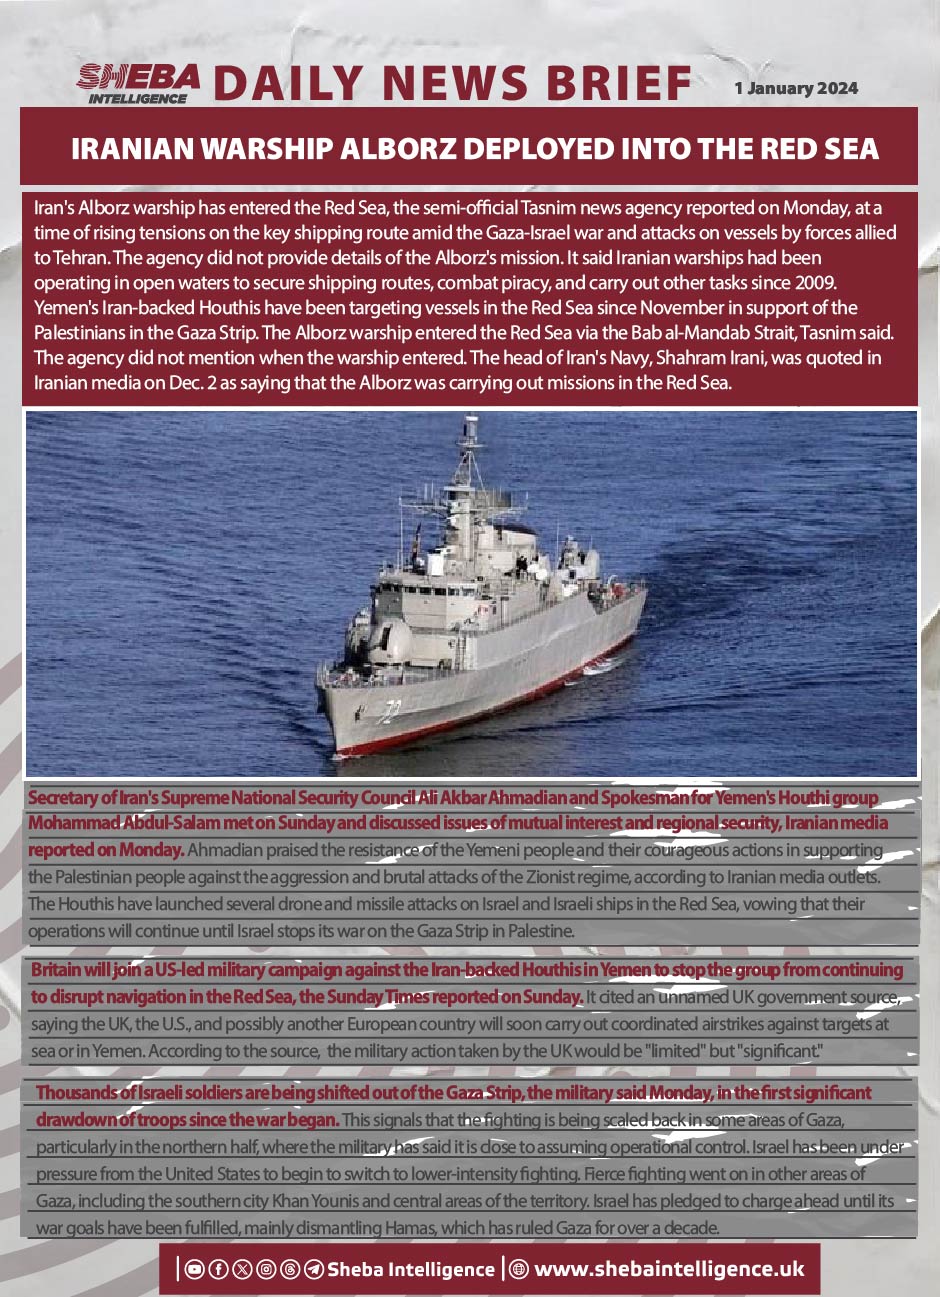 Iranian Warship Alborz Deployed Into the Red Sea